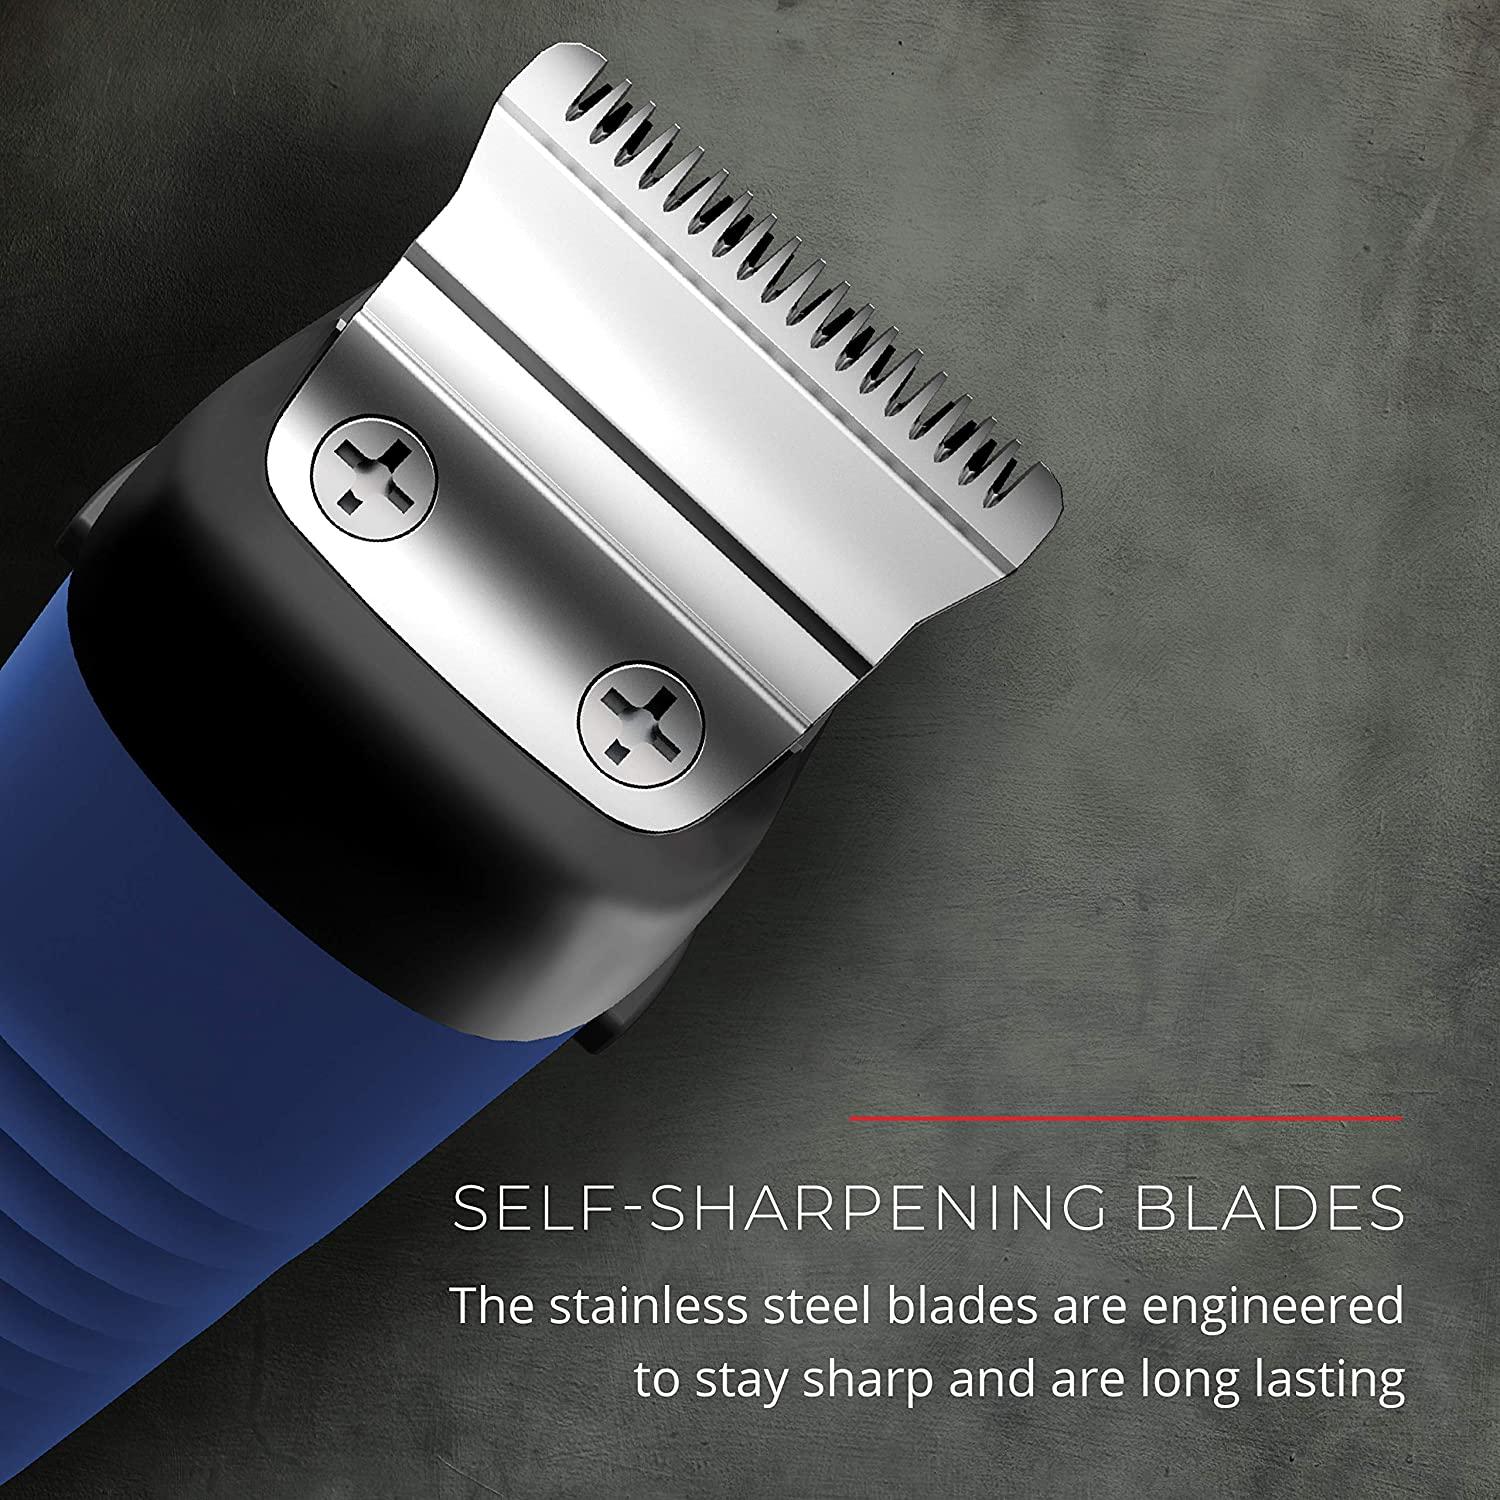 Remington electric shaver/safety razor blade sharpener